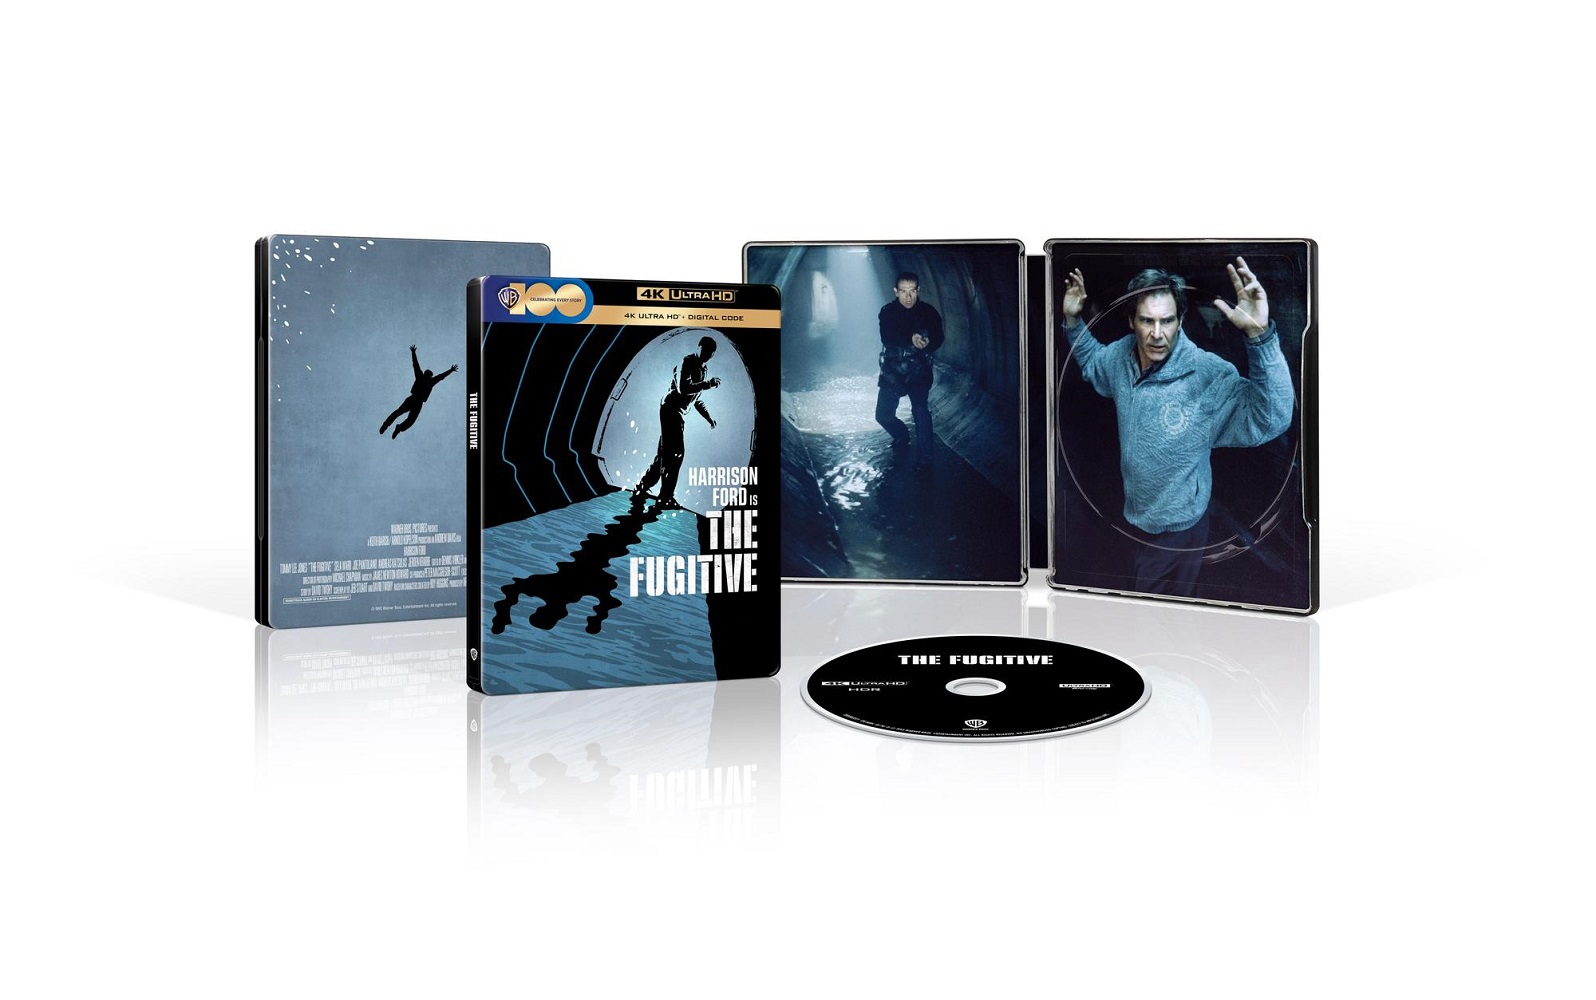 The Fugitive [Includes Digital Copy] [SteelBook] [4k Ultra HD Blu-ray] [Only @ Best Buy]